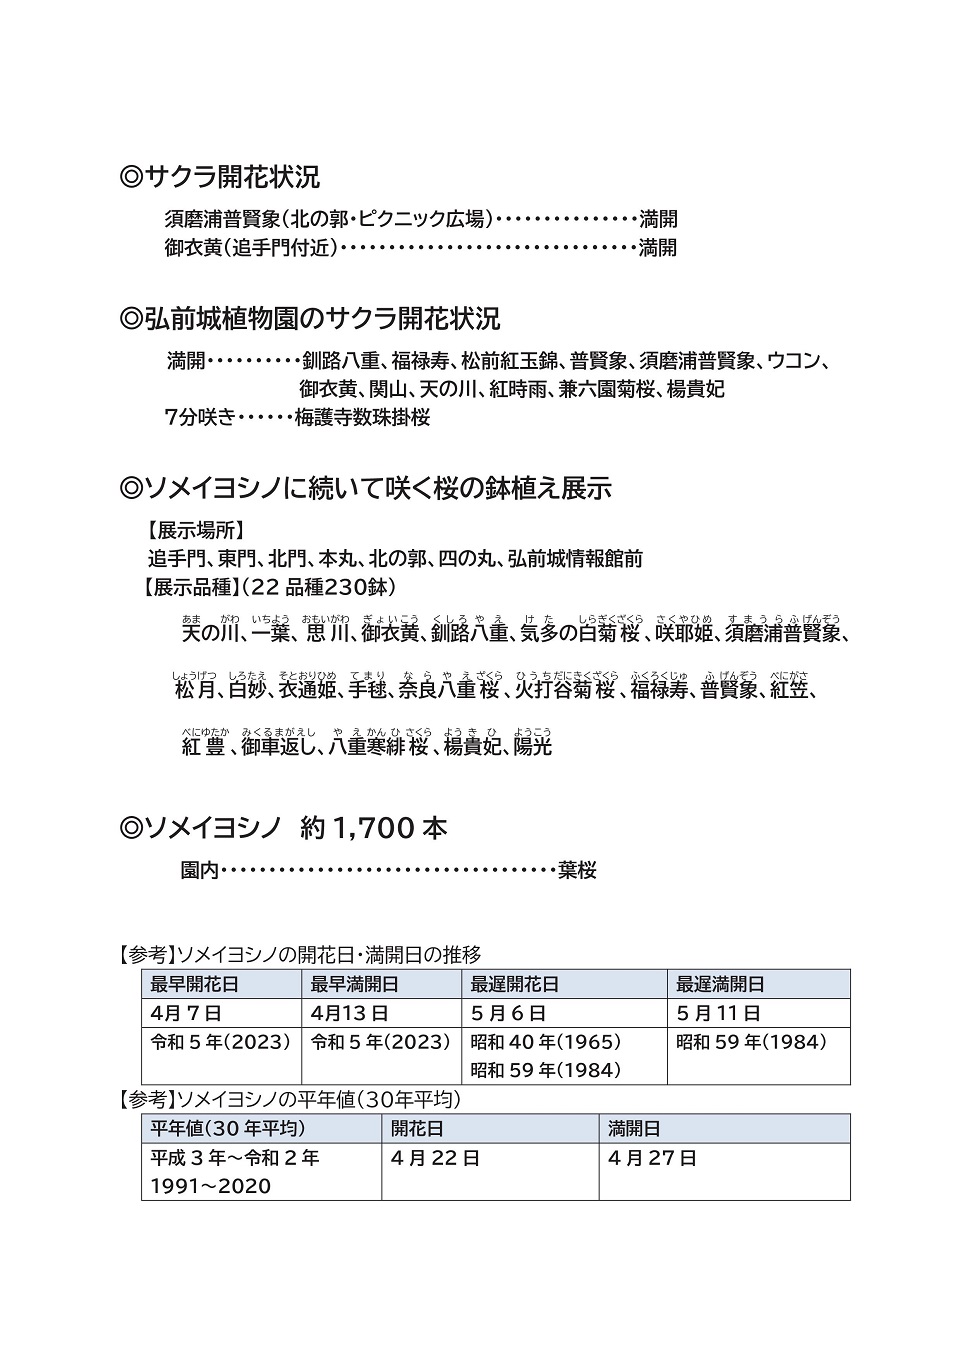 Hirosaki Cherry Blossom Information